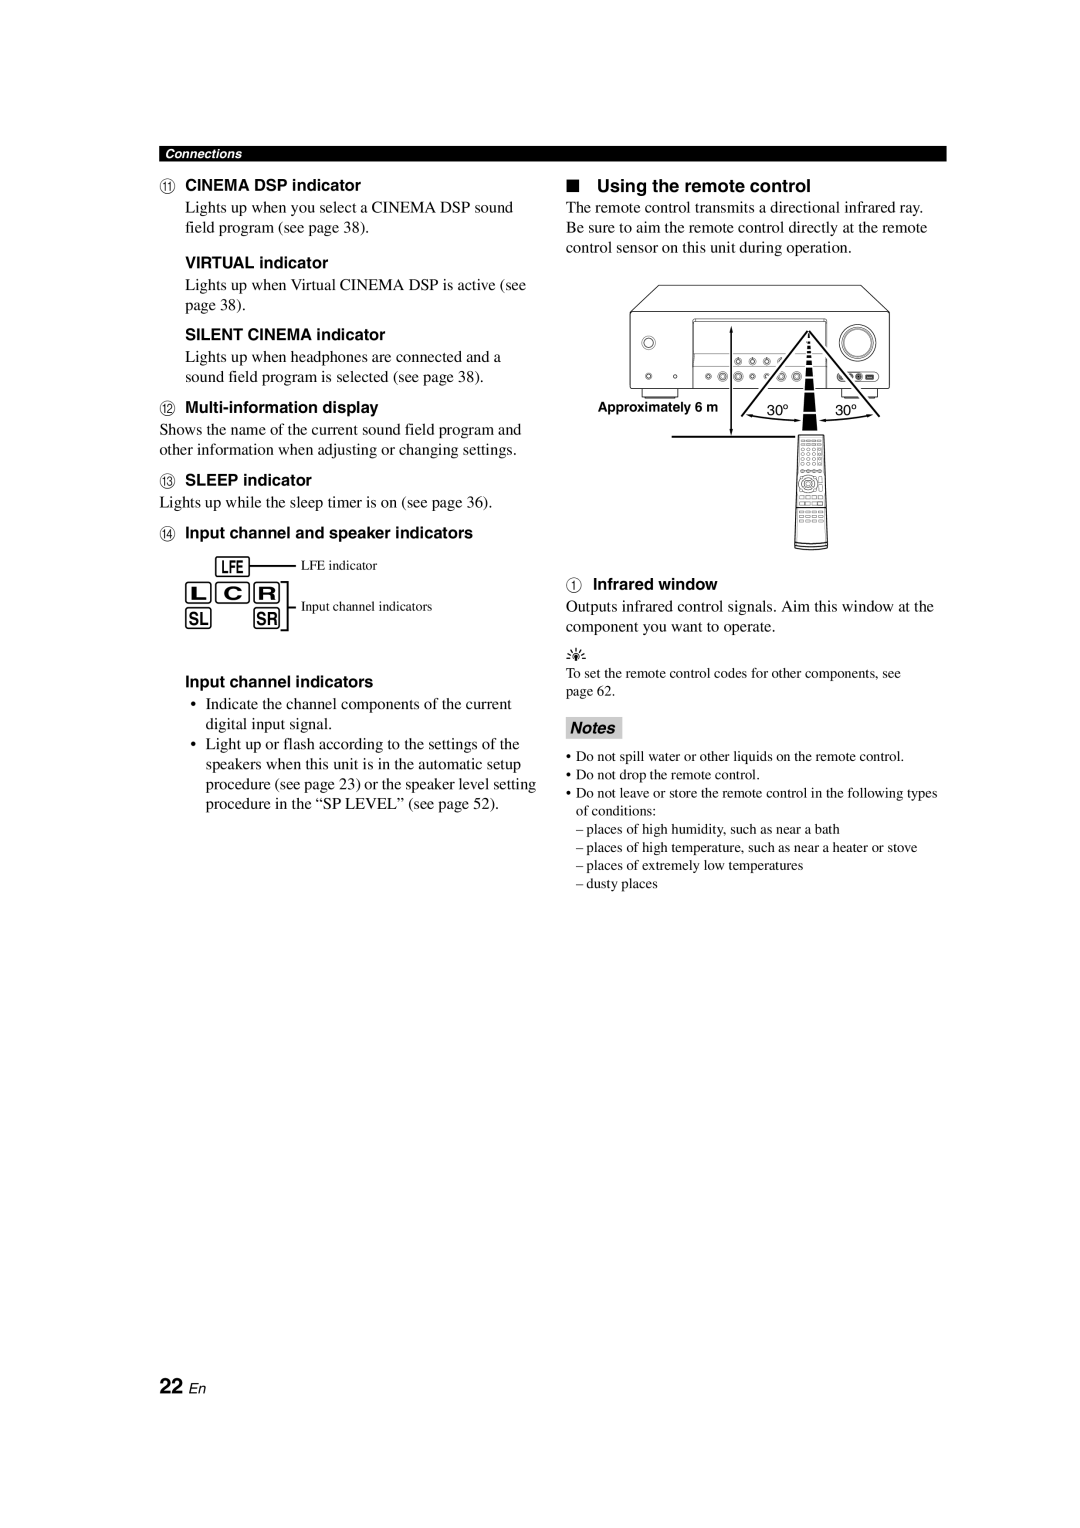 Yamaha DSP-AX463 22 En, L C R, Sl Sr, Using the remote control, ACINEMA DSP indicator, VIRTUAL indicator, CSLEEP indicator 